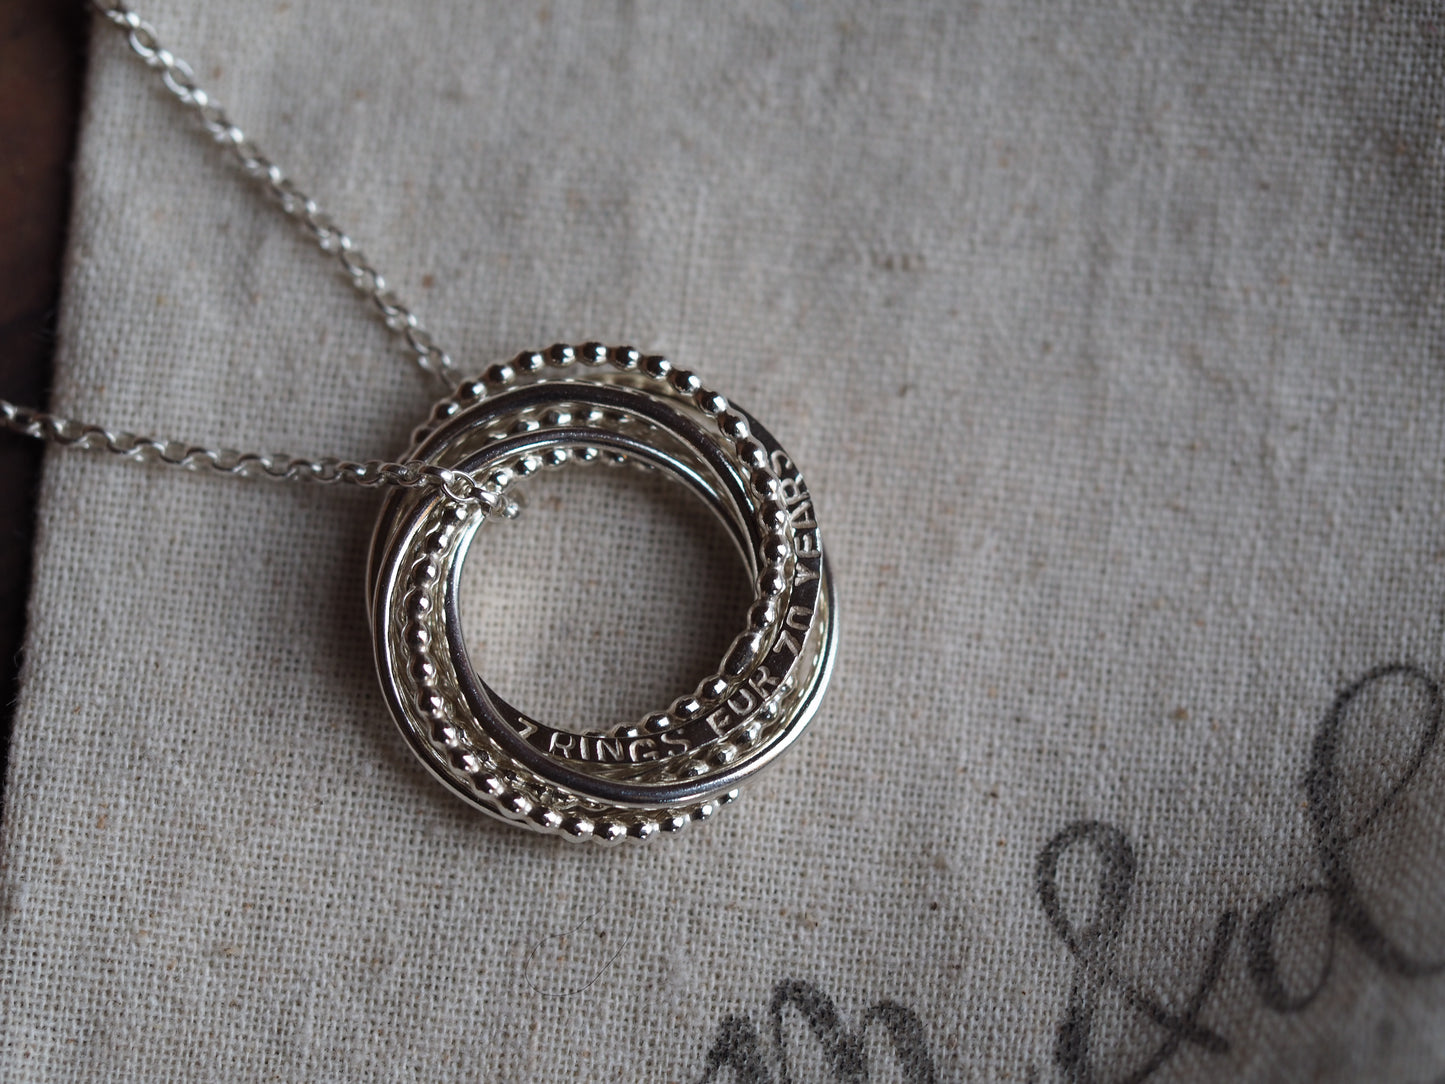 Silver Interlocking ring necklace